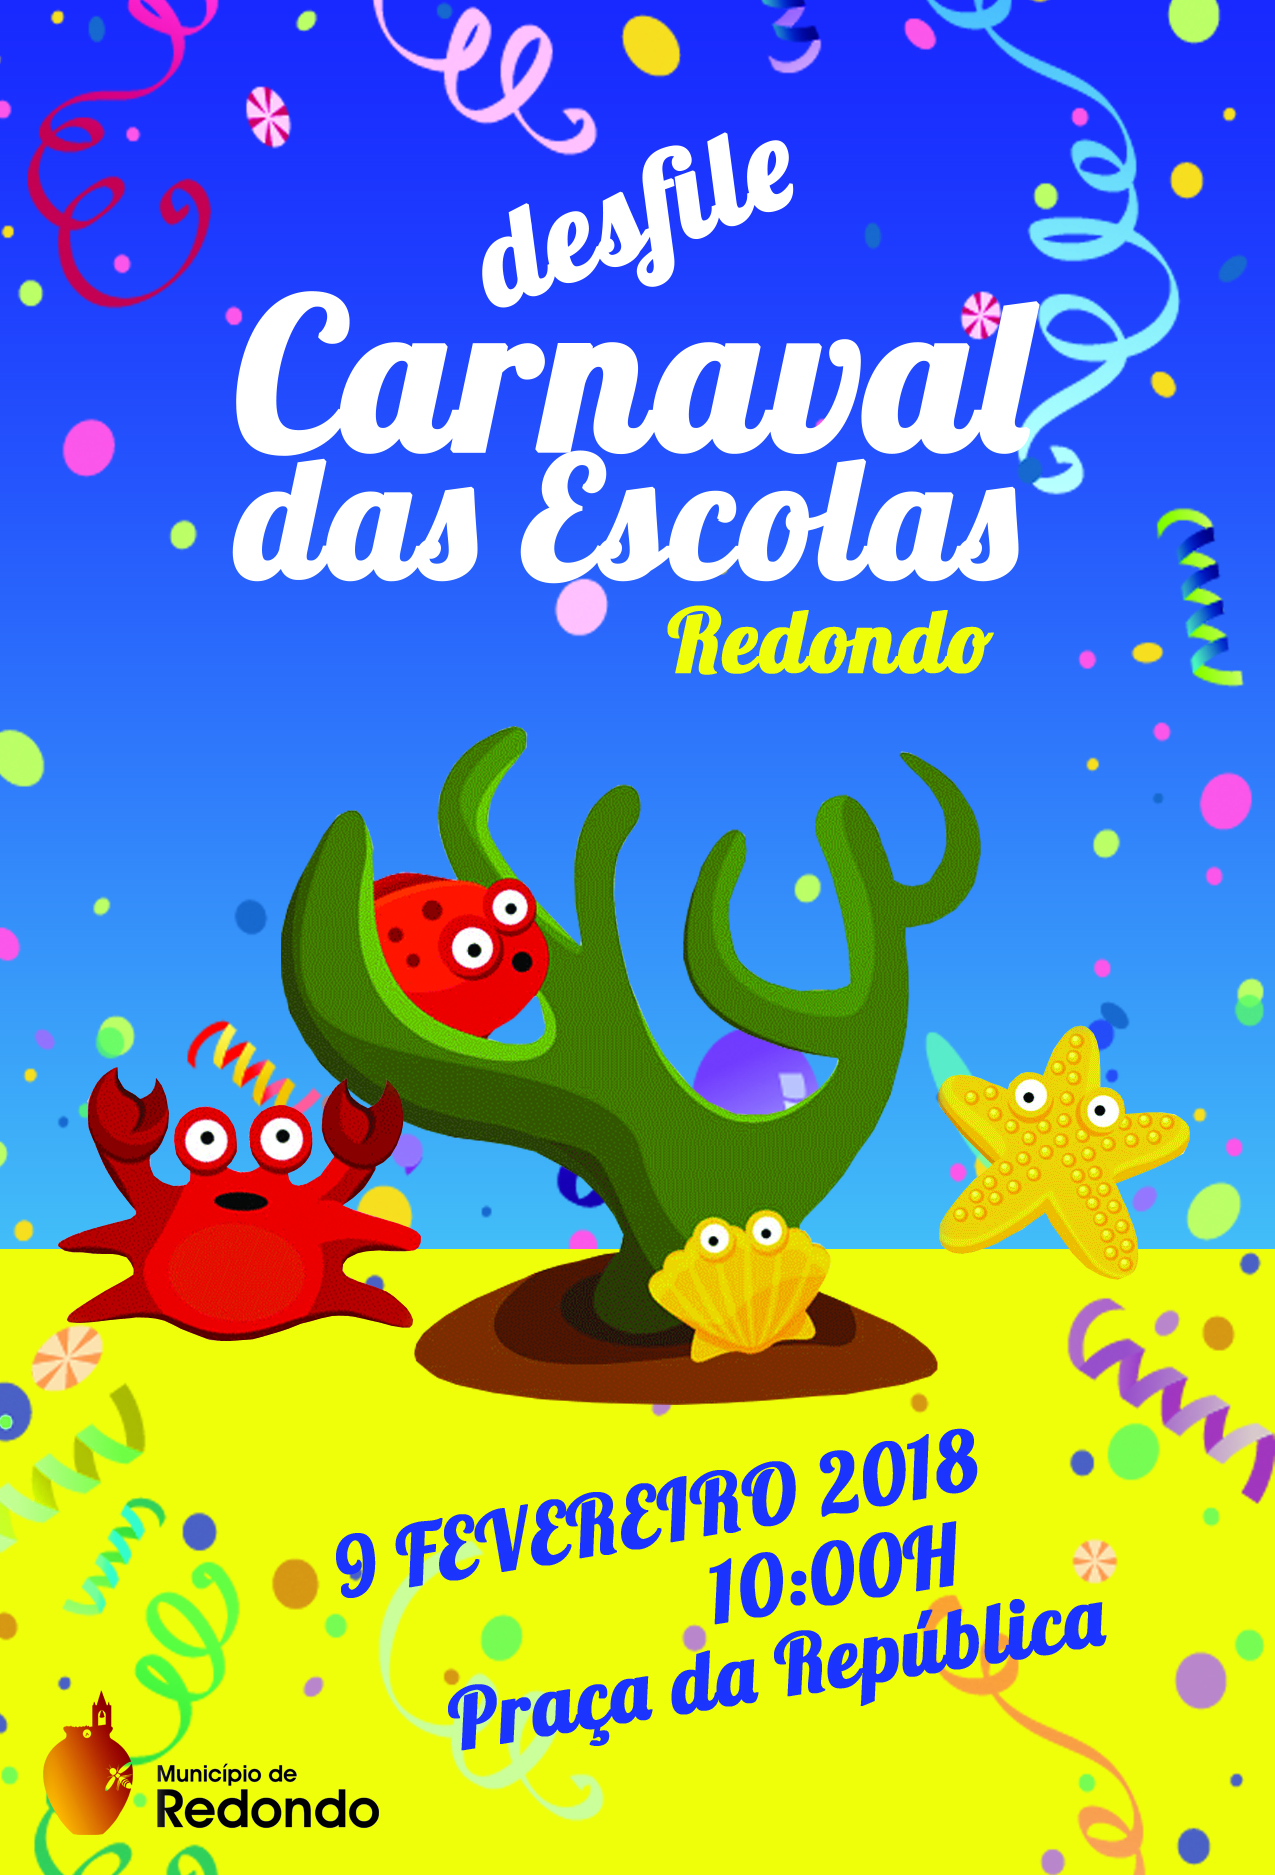 CarnavaldasEscolas2018_F_0_1594718855.